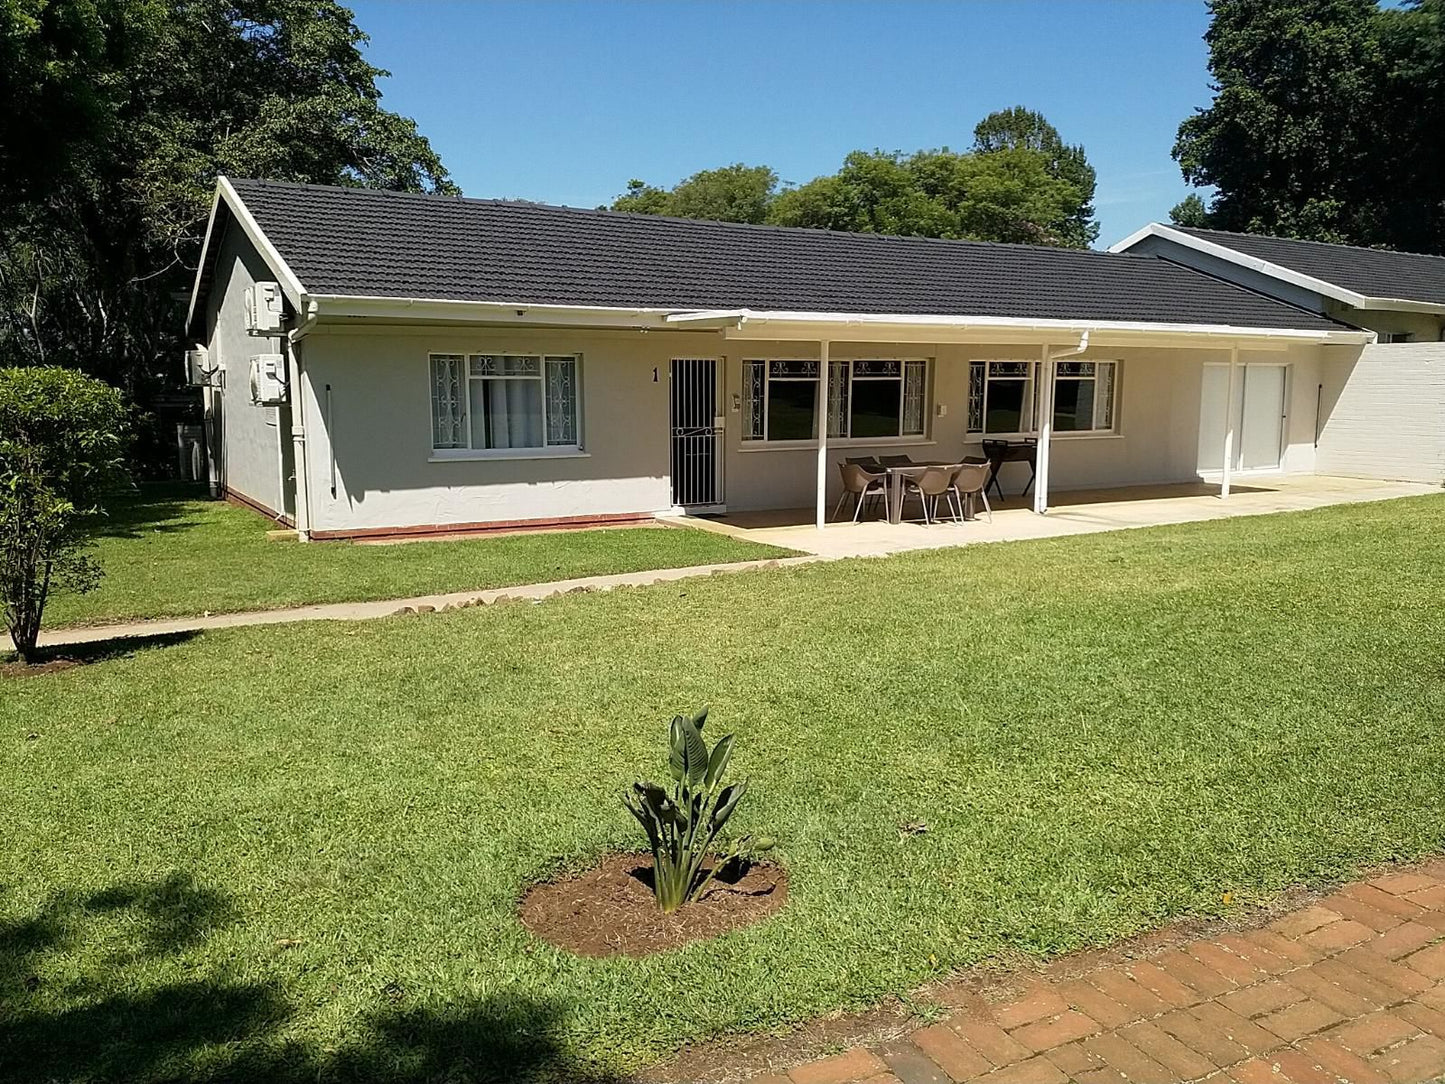 Pendennis Hillcrest Durban Kwazulu Natal South Africa House, Building, Architecture, Garden, Nature, Plant, Living Room